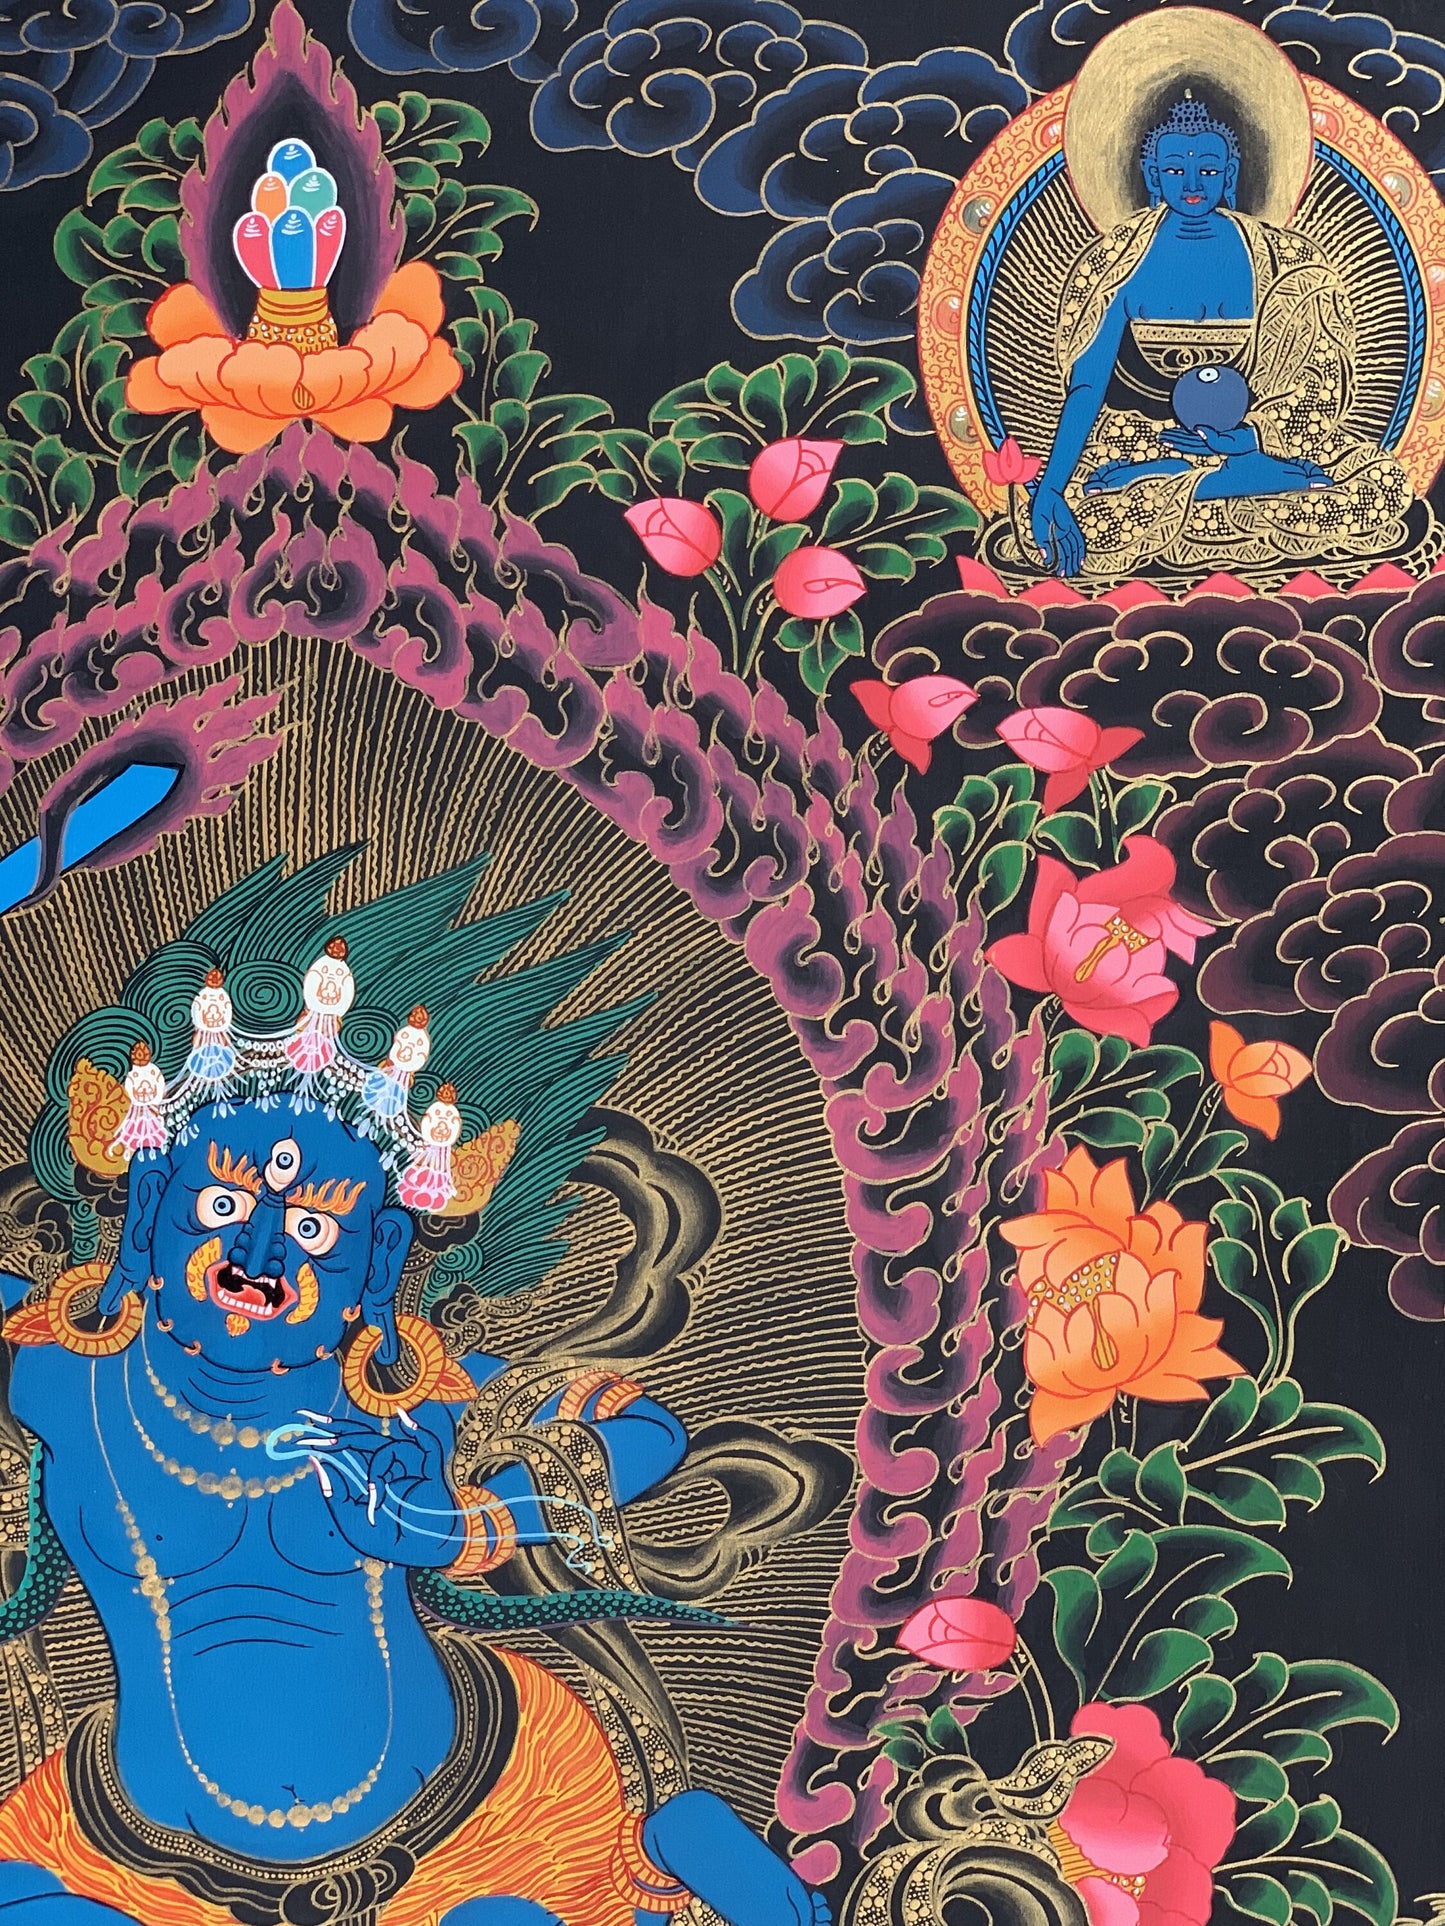 2 Armed Mahakala/ Kalabhairava Masterpiece Master Quality Original Tibetan Thangka Painting Compassion Meditation Art  21 x 27 -Inches